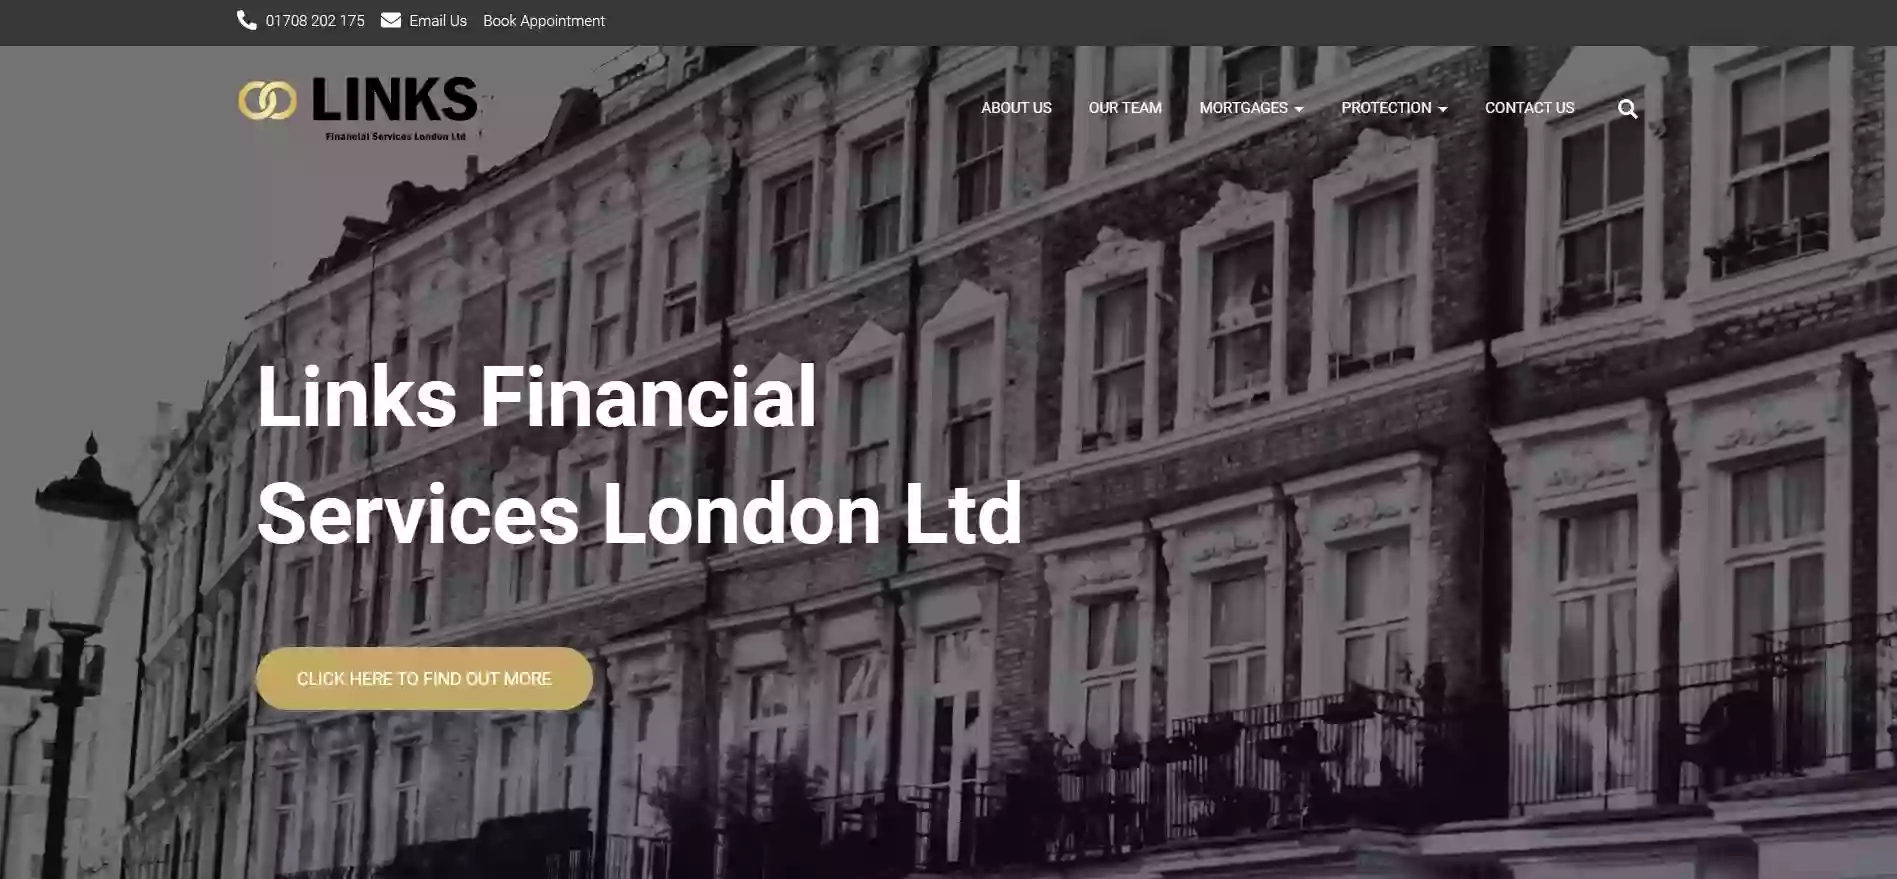 Links Financial Services London Ltd